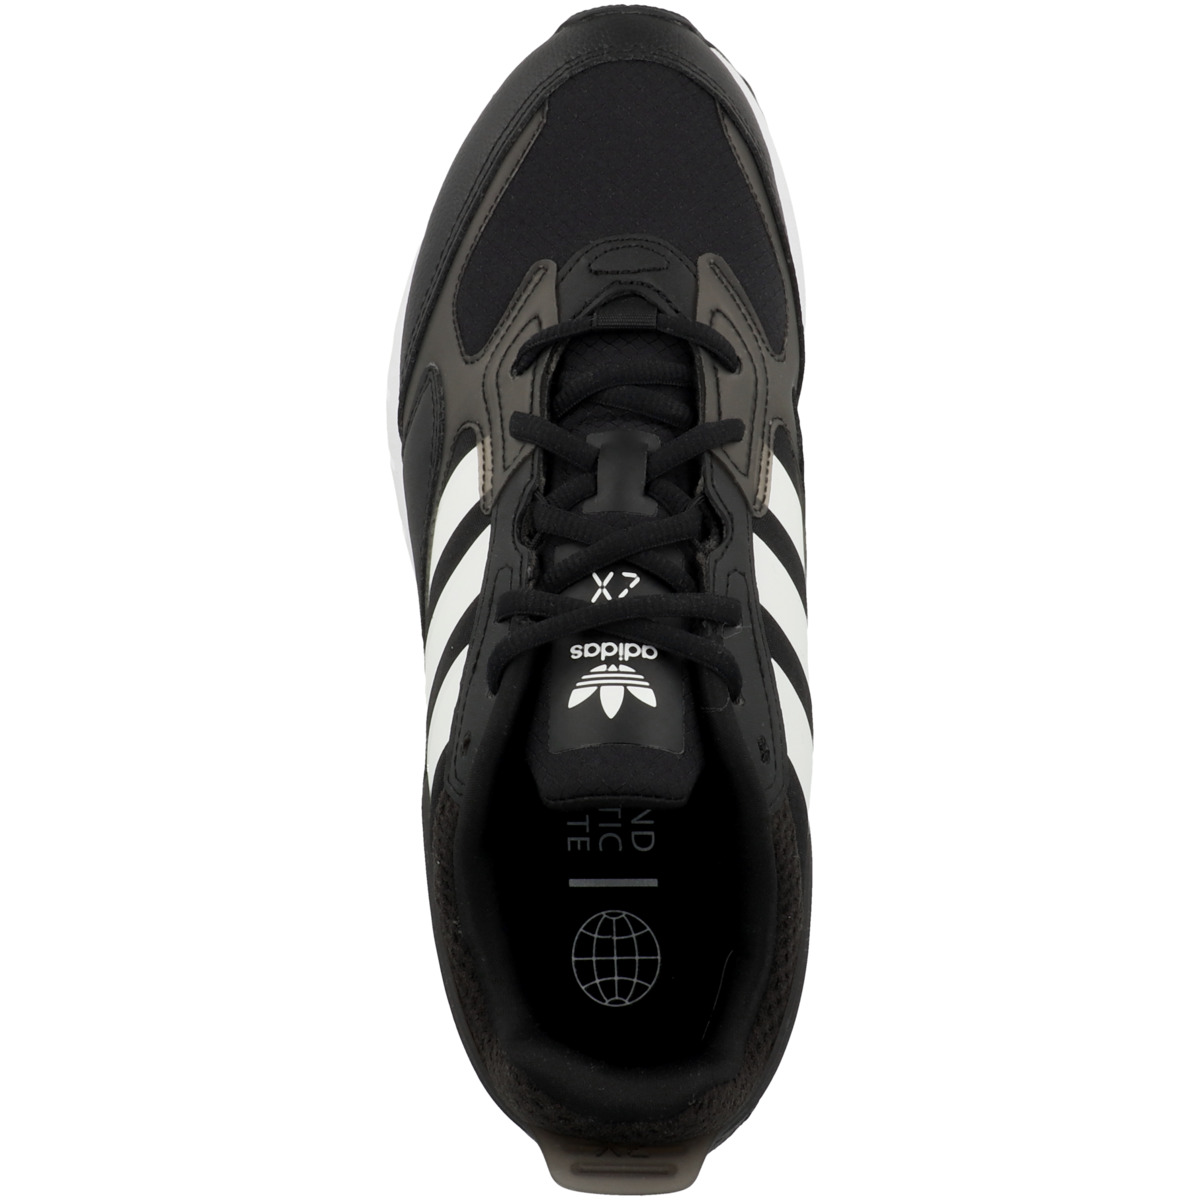 Adidas ZX 1K Boost 2.0 Sneaker schwarz